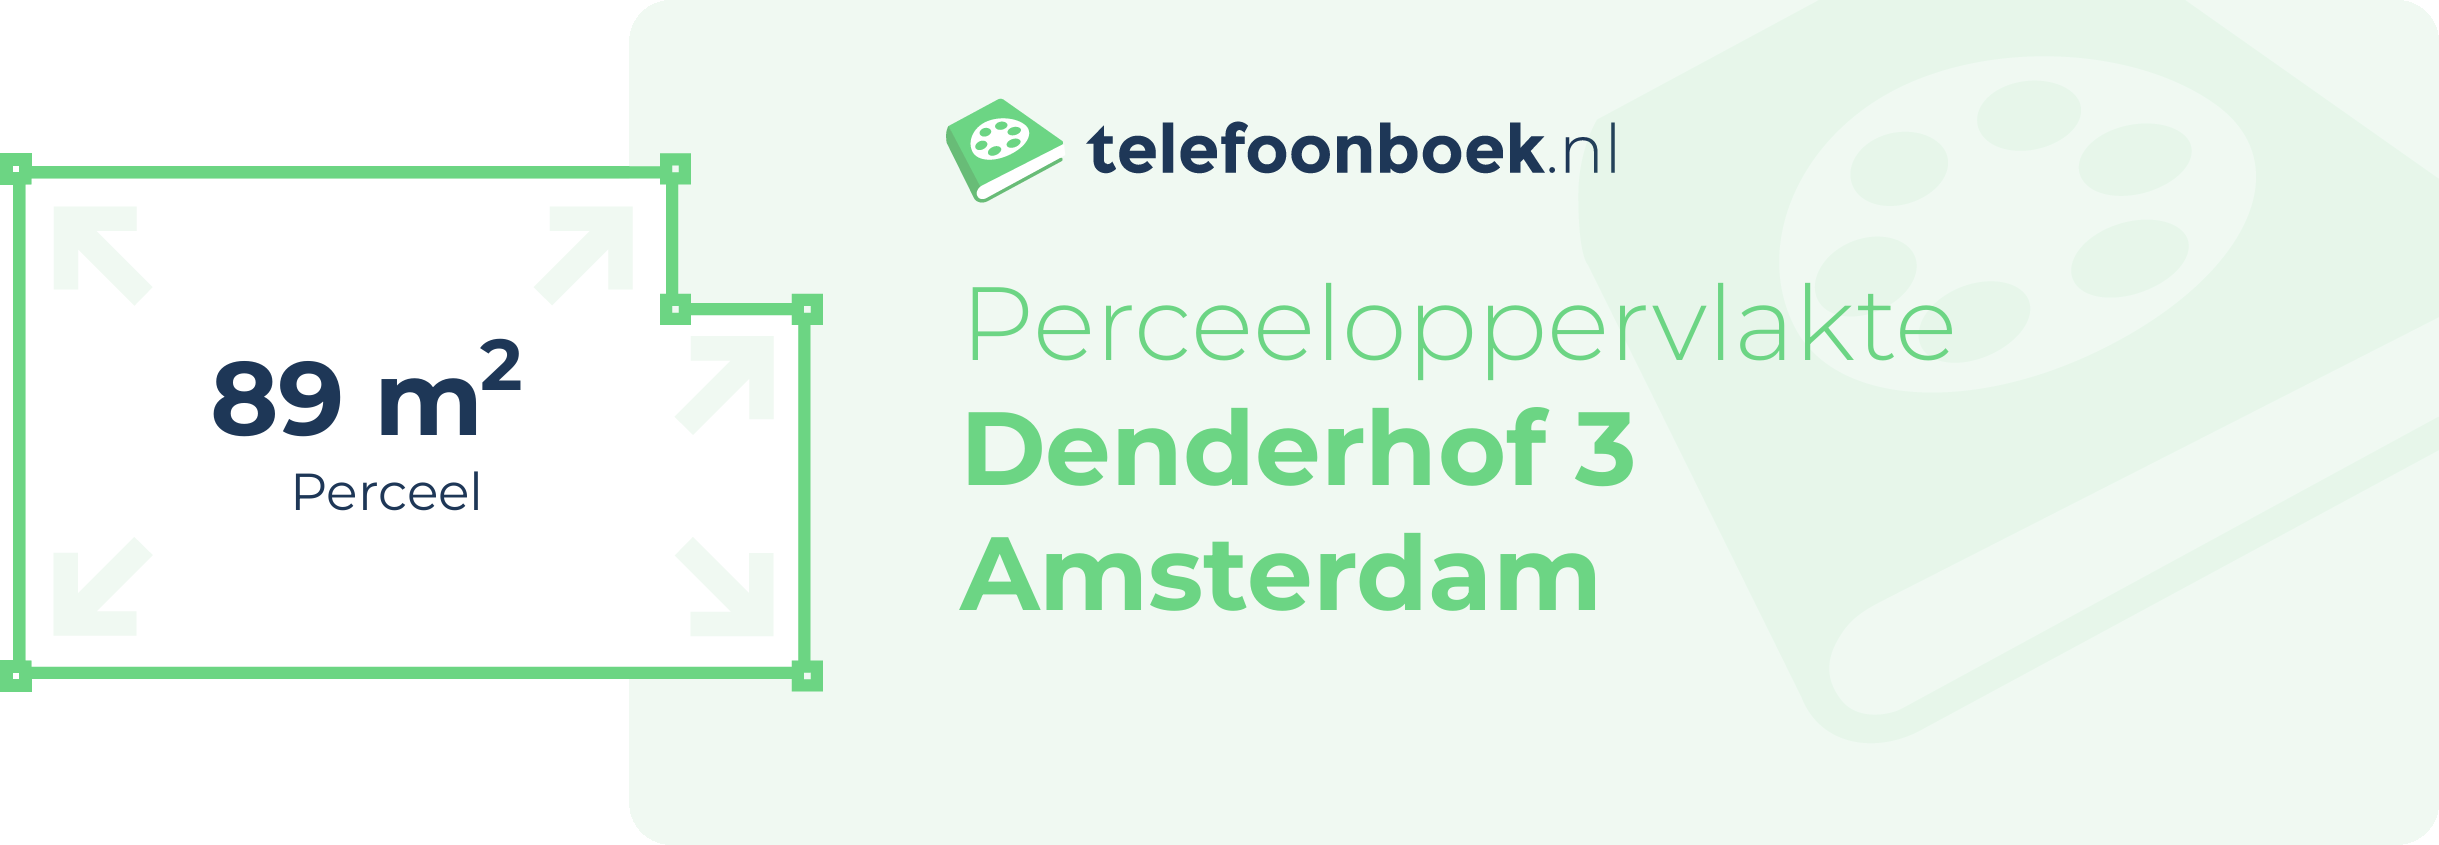 Perceeloppervlakte Denderhof 3 Amsterdam